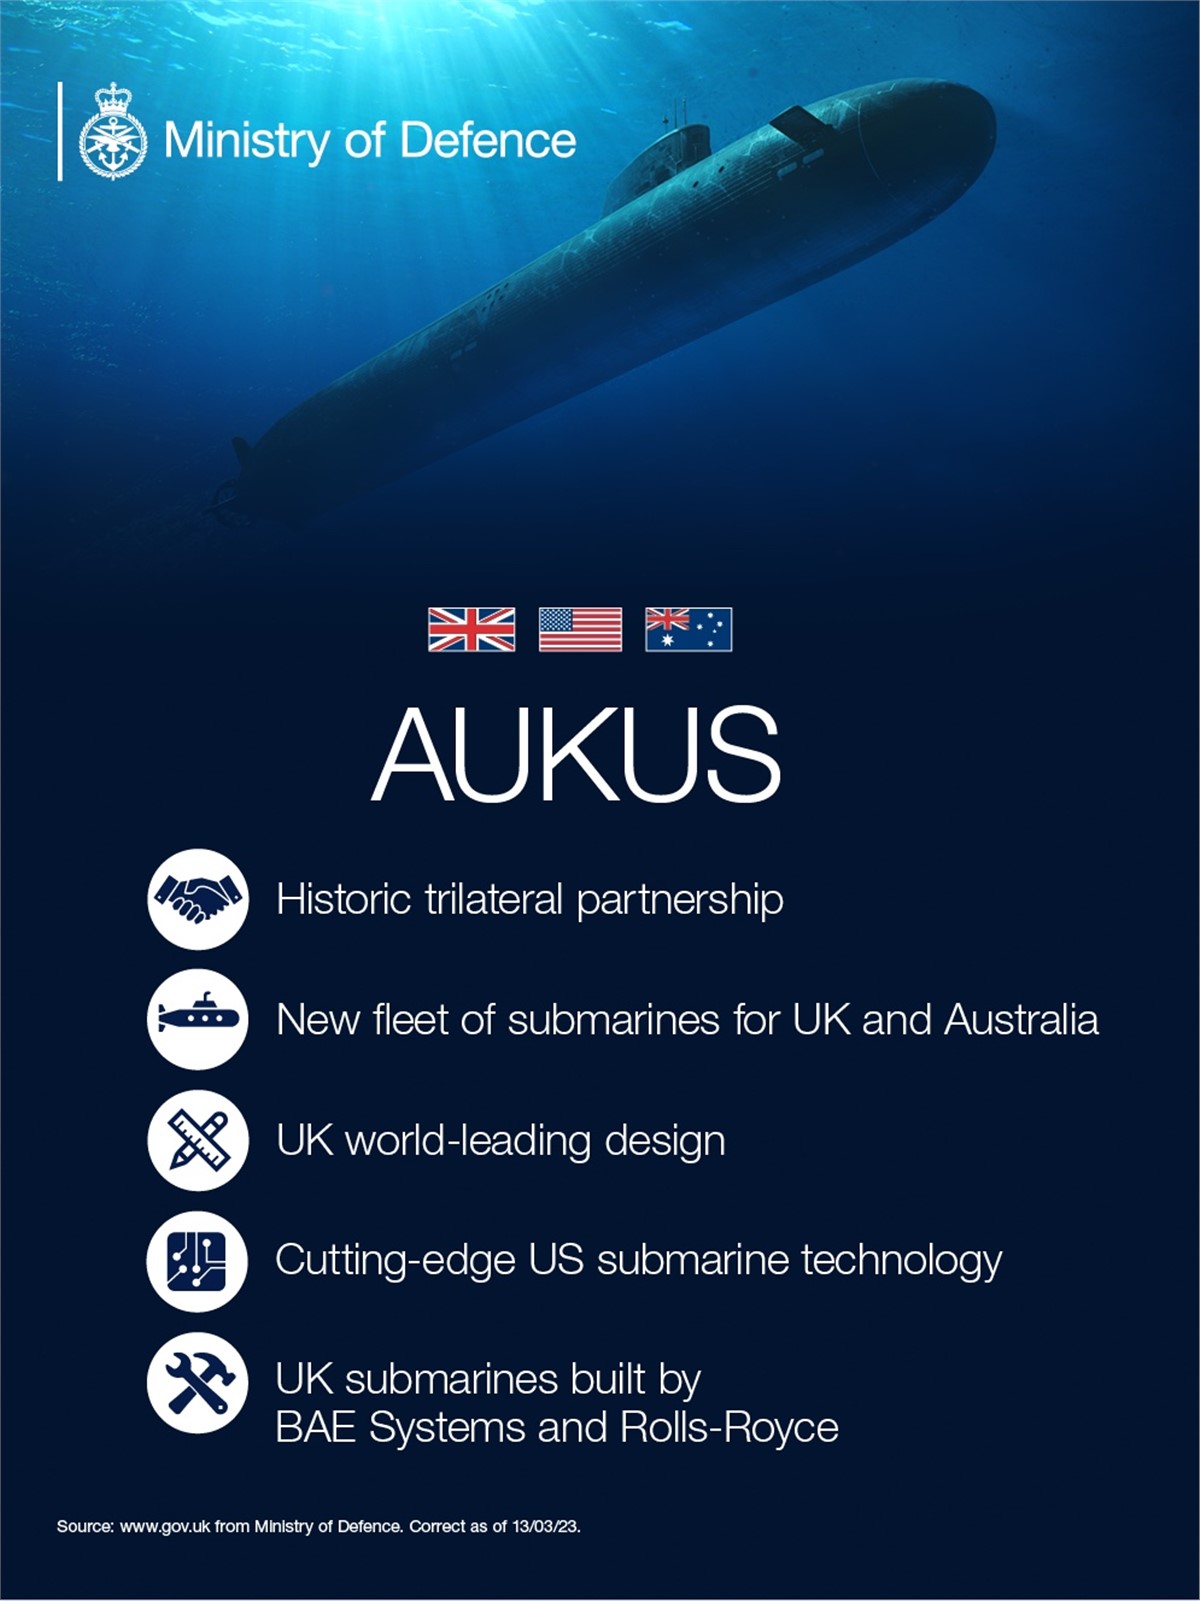 British-led Design Chosen for AUKUS Submarine Project